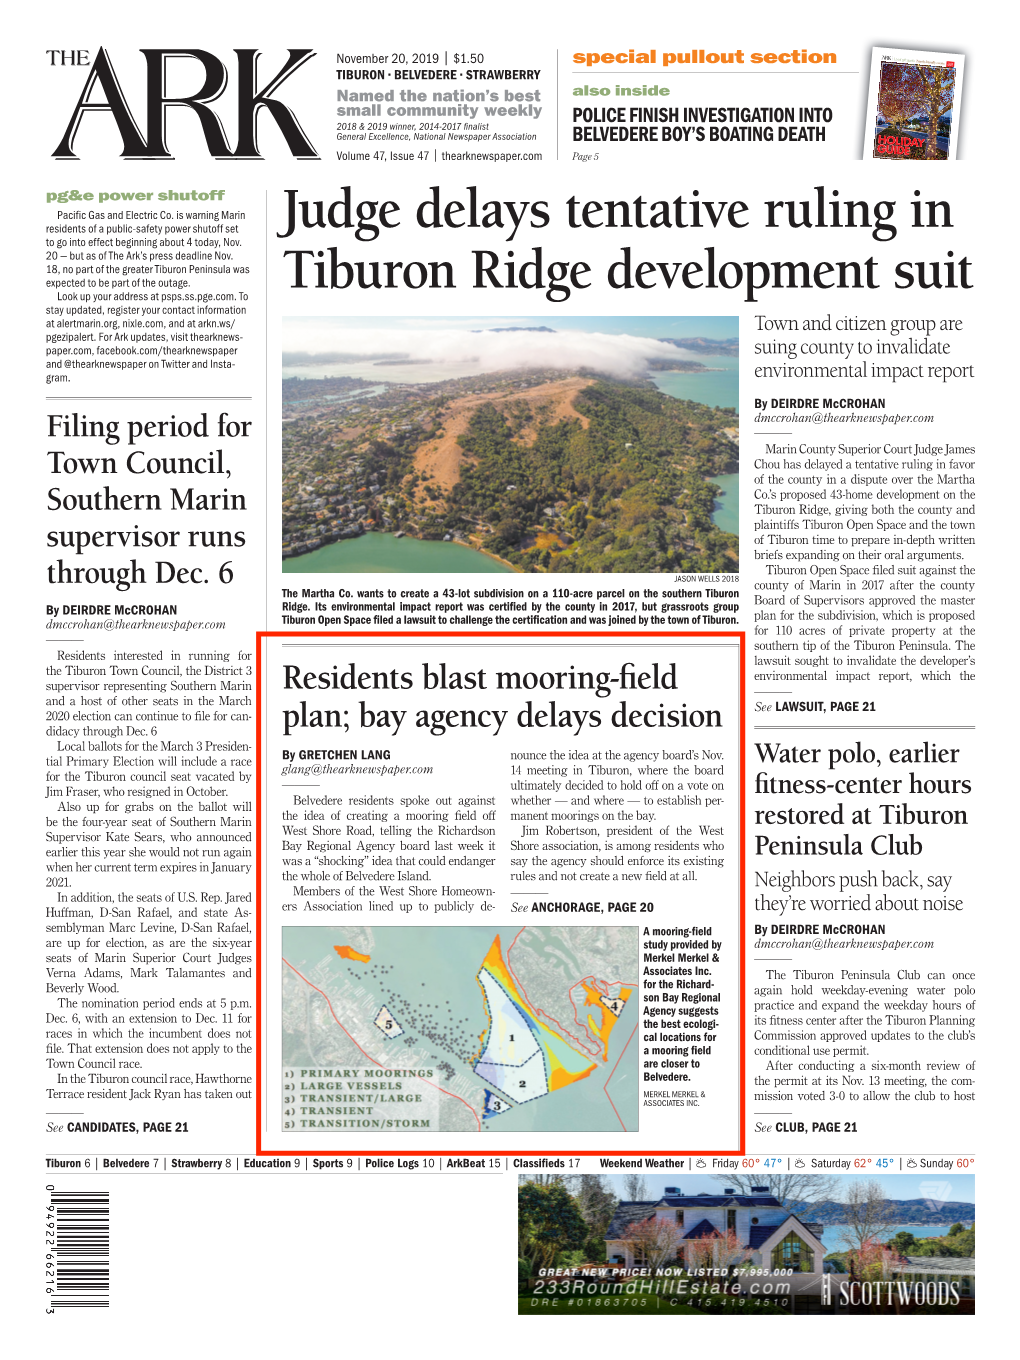 Judge Delays Tentative Ruling in Tiburon Ridge Development Suit